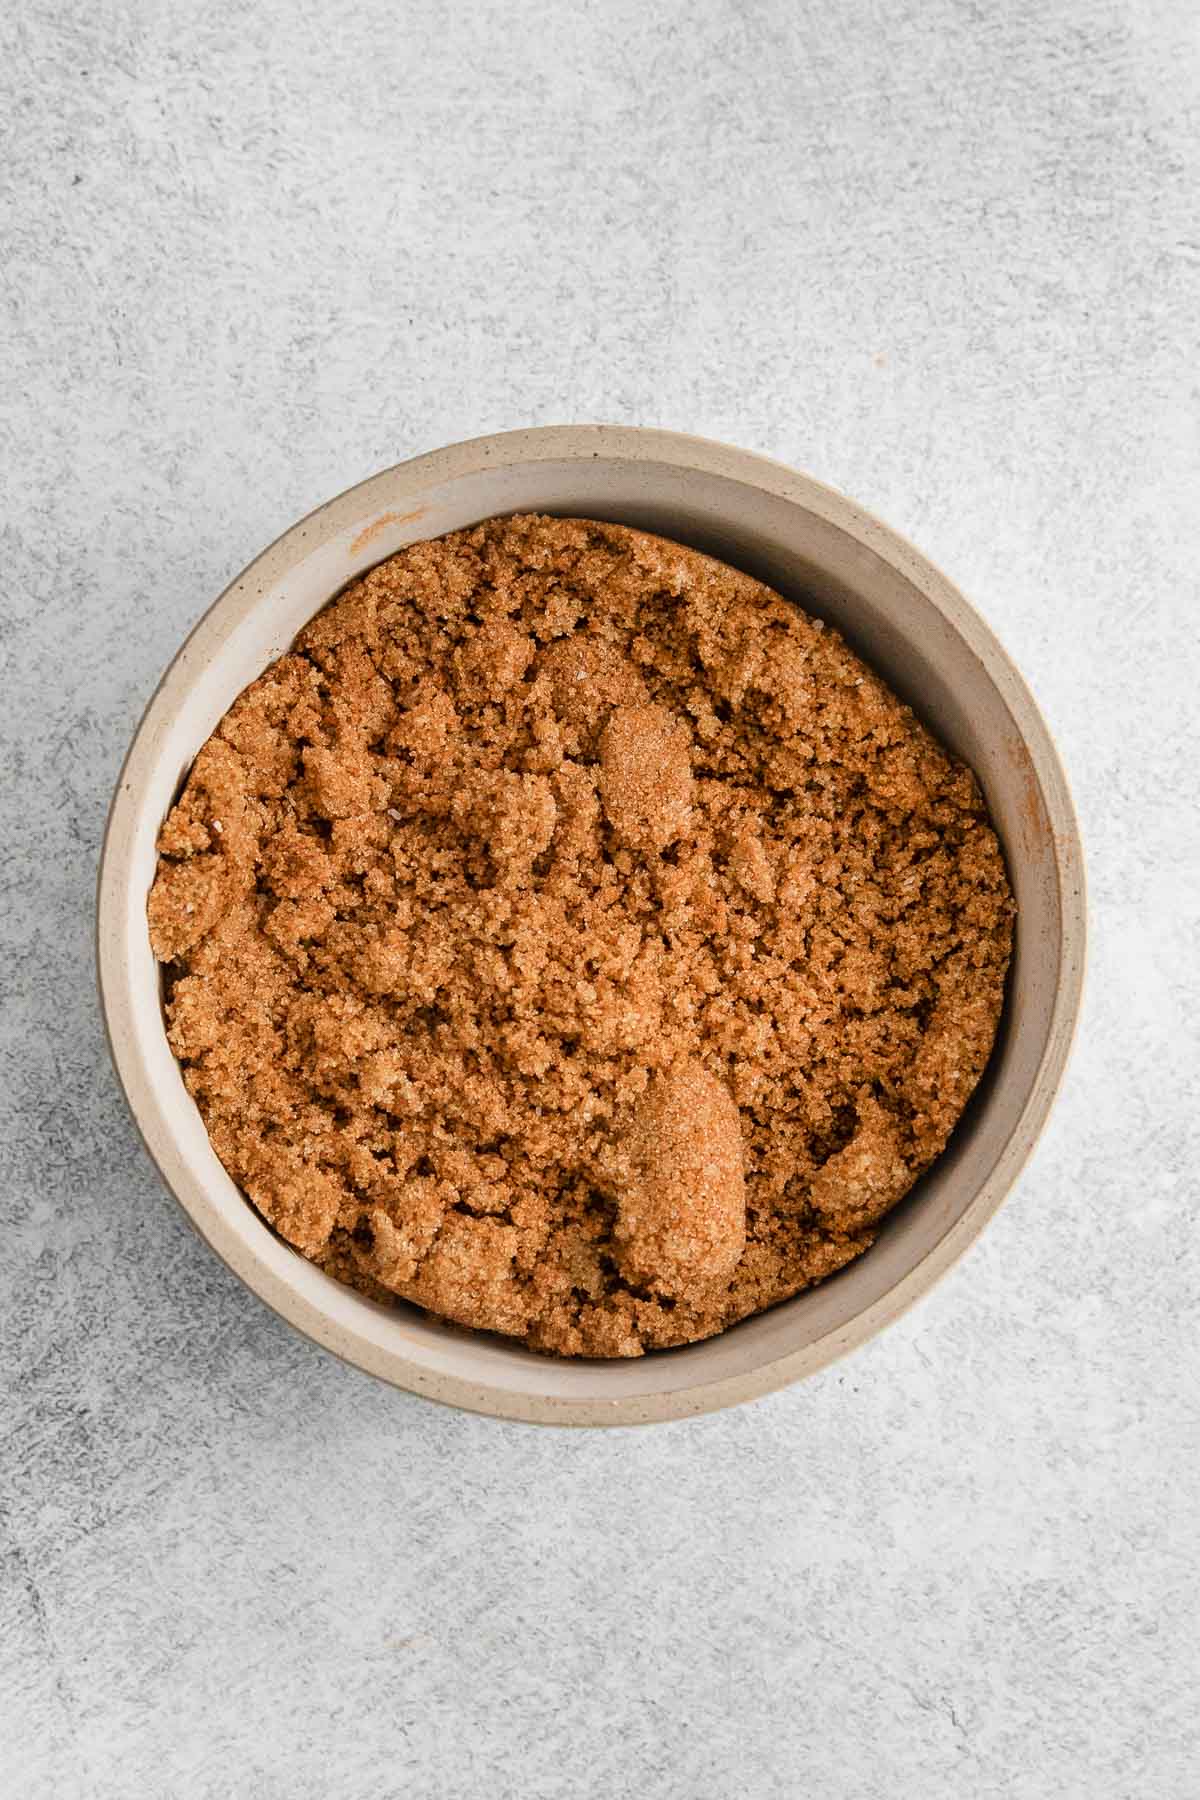 cinnamon sugar mixture in a small tan bowl.